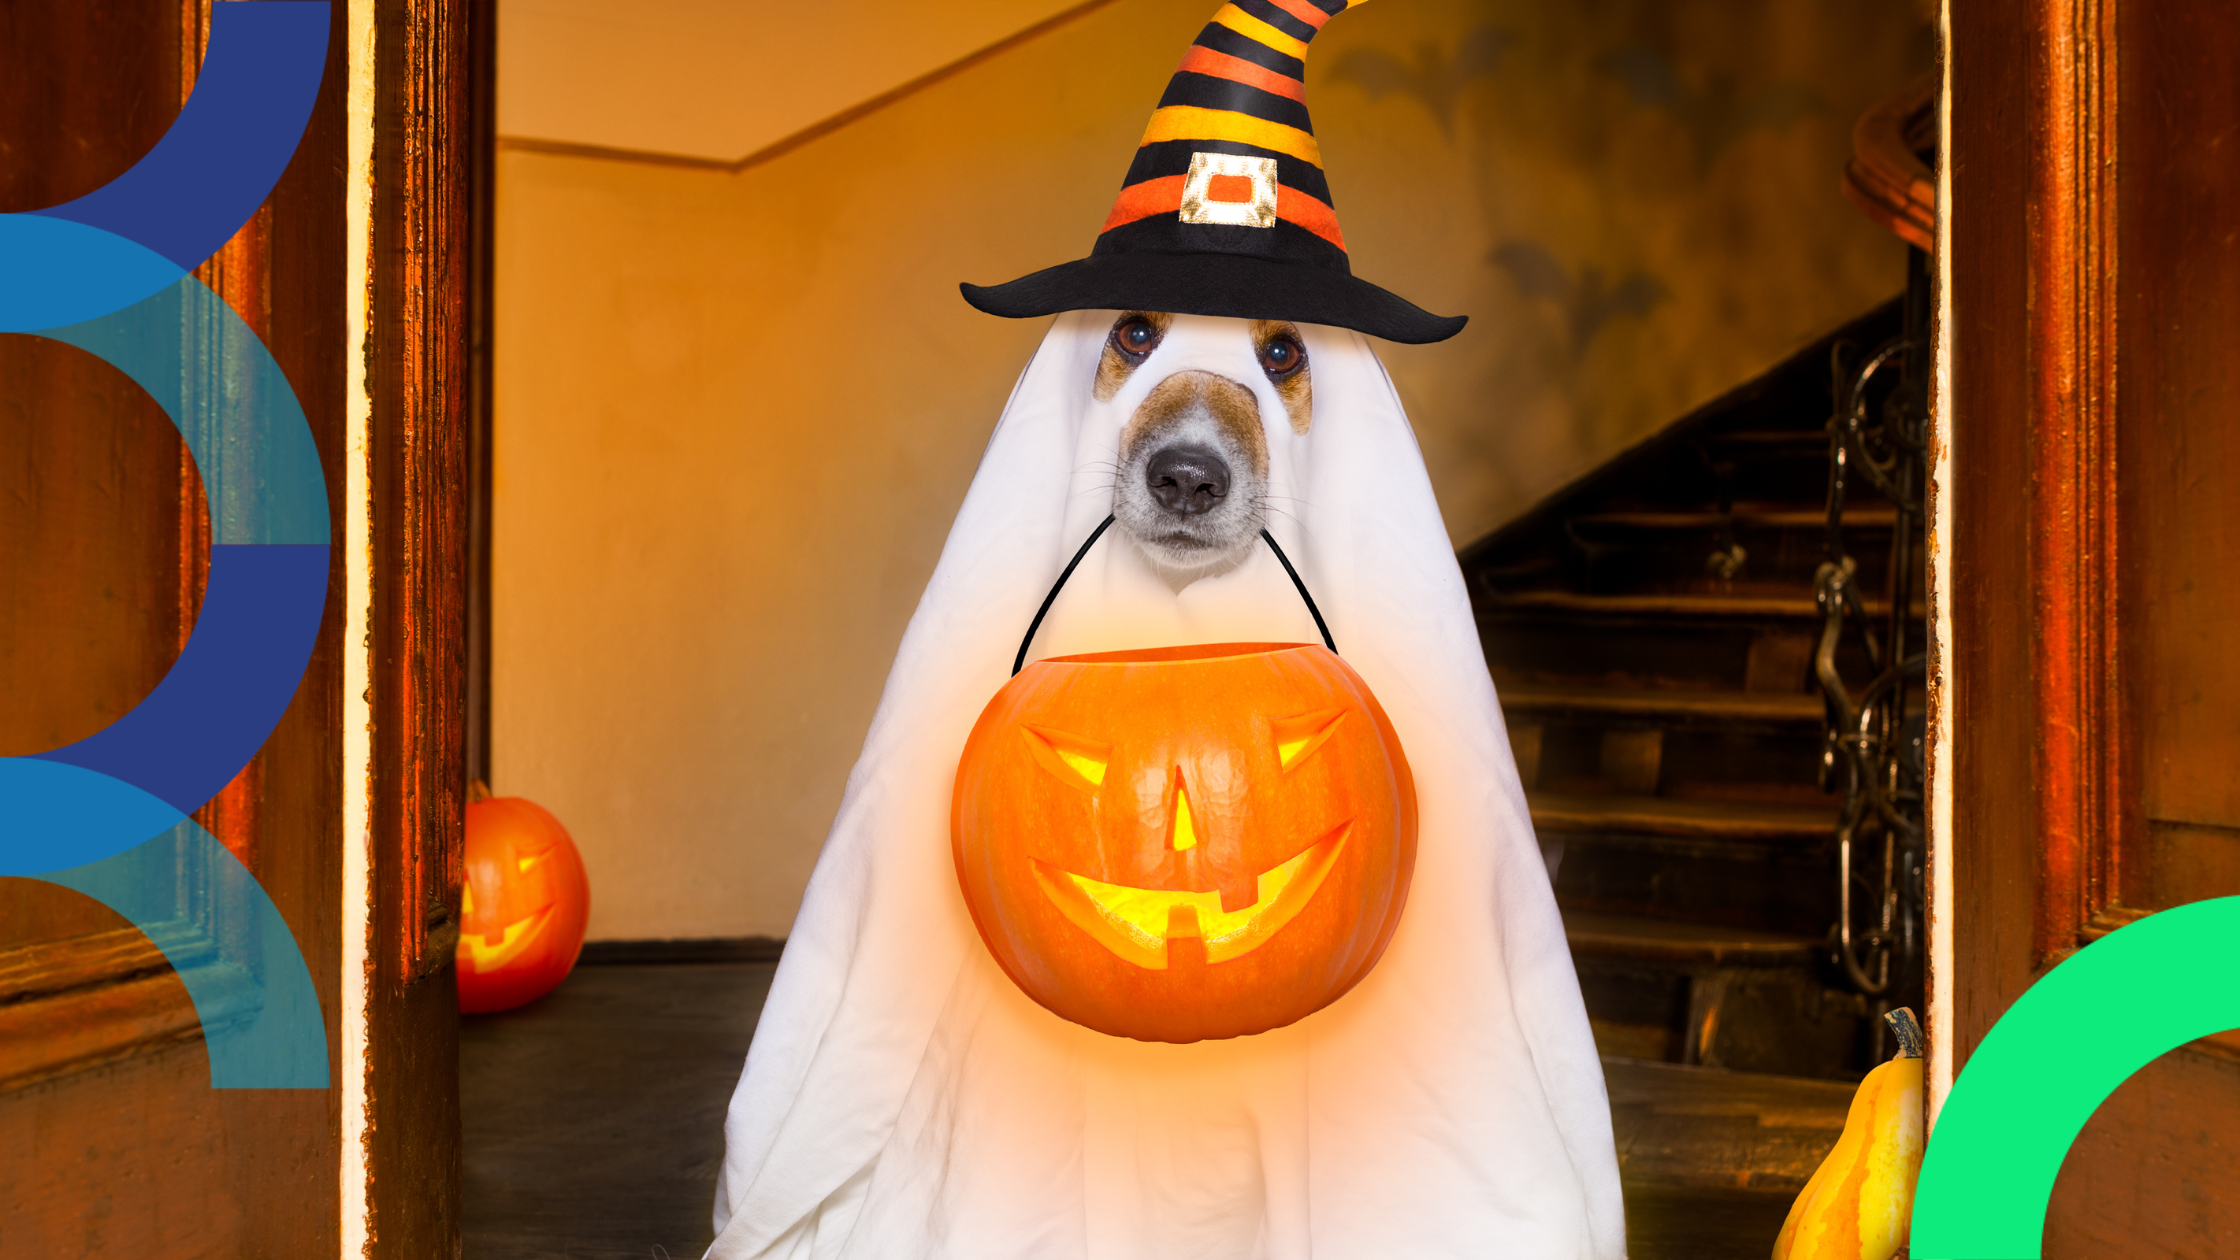 Dog in a costume